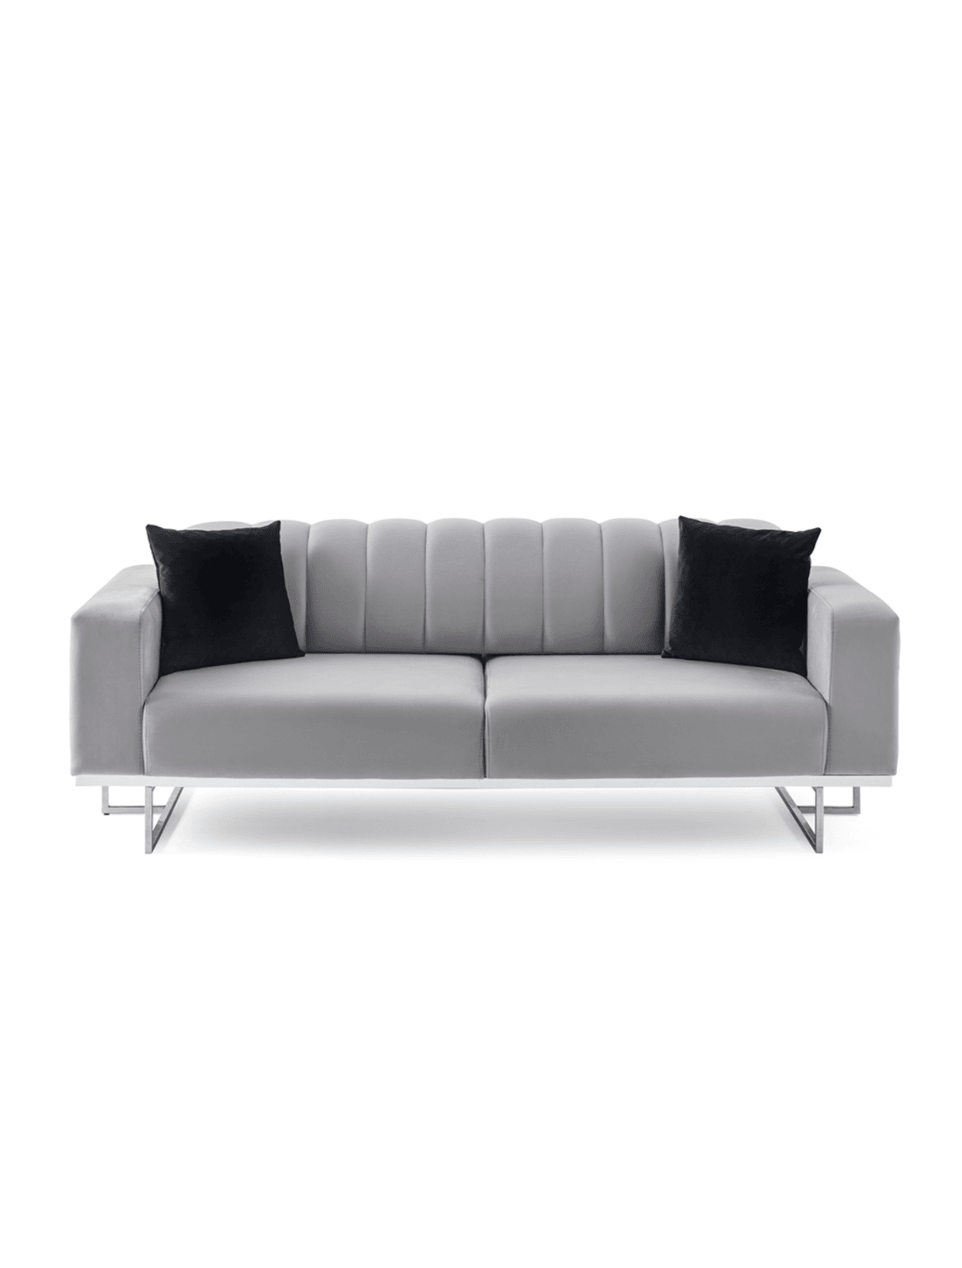 Milos Sofa - Home Store Furniture